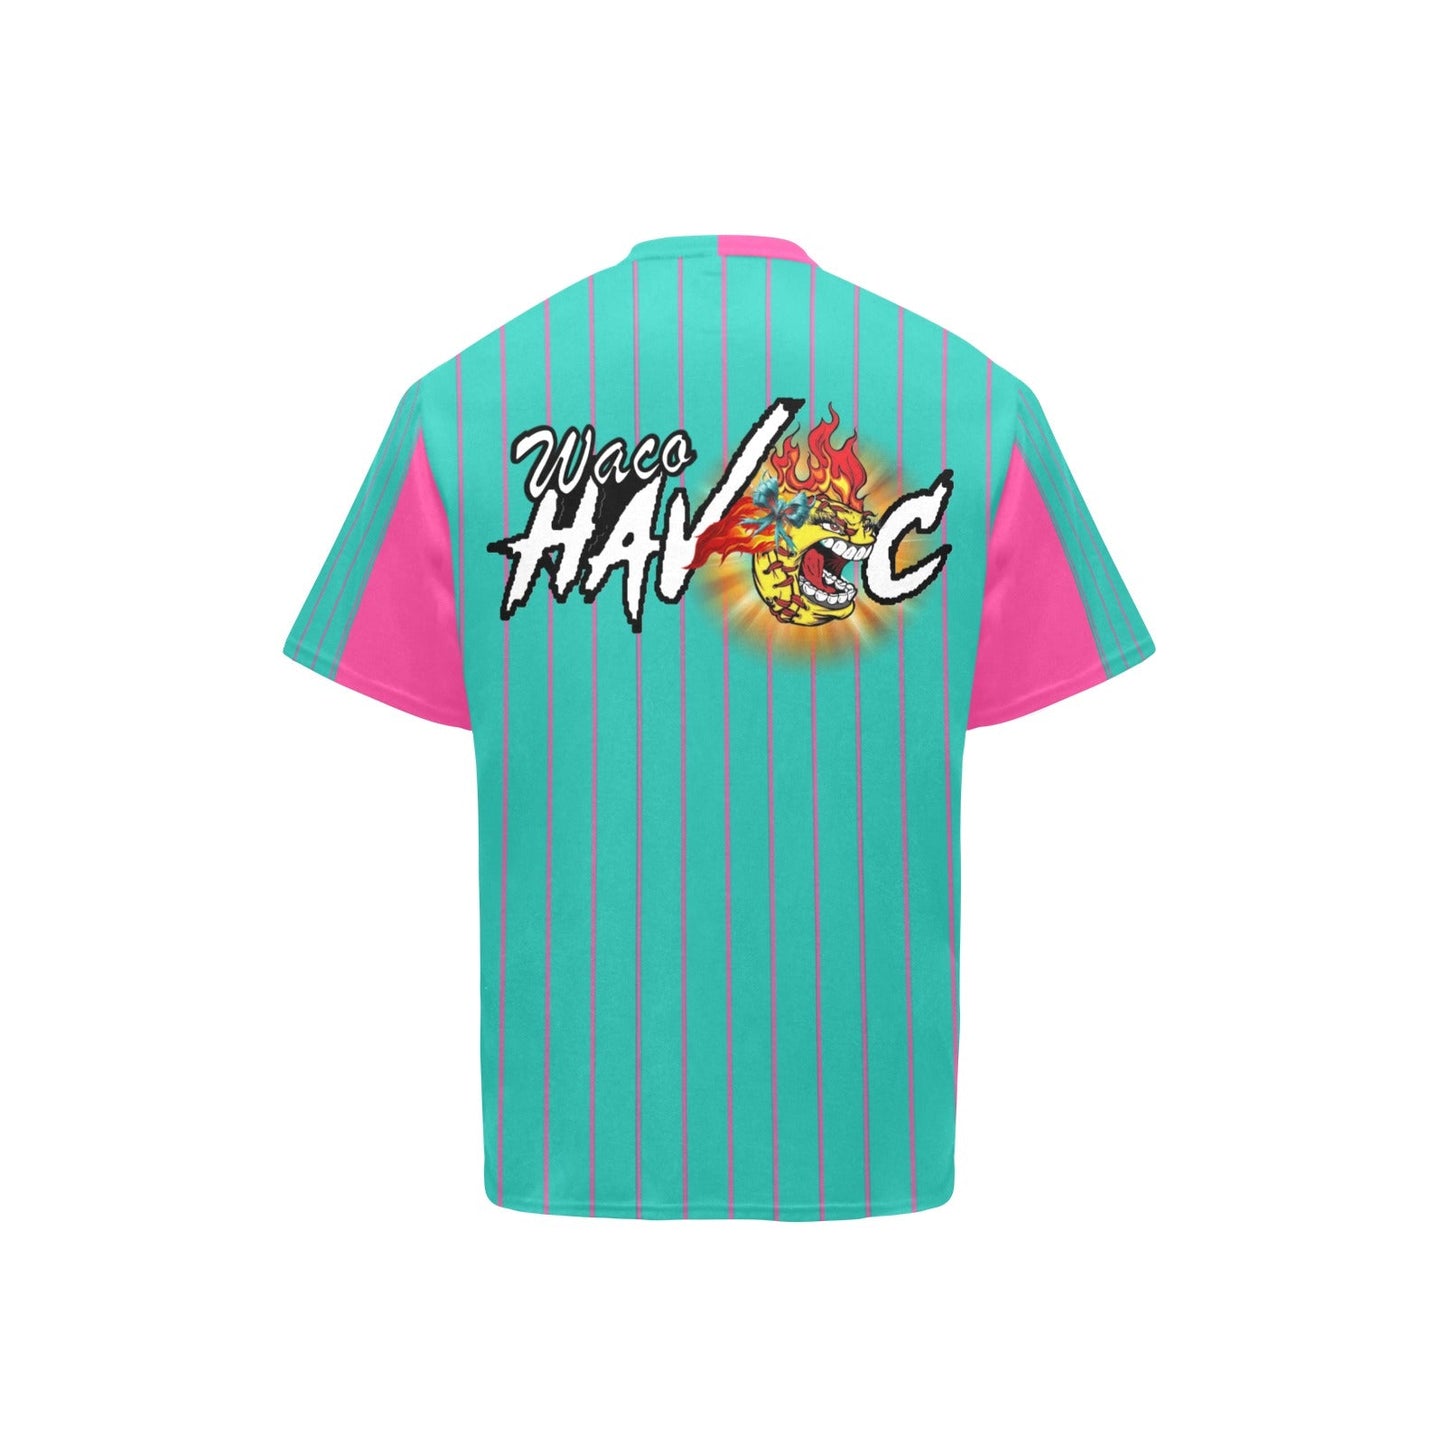 Waco Havoc 3 Button Dry Fit Coaches Shirt Striped